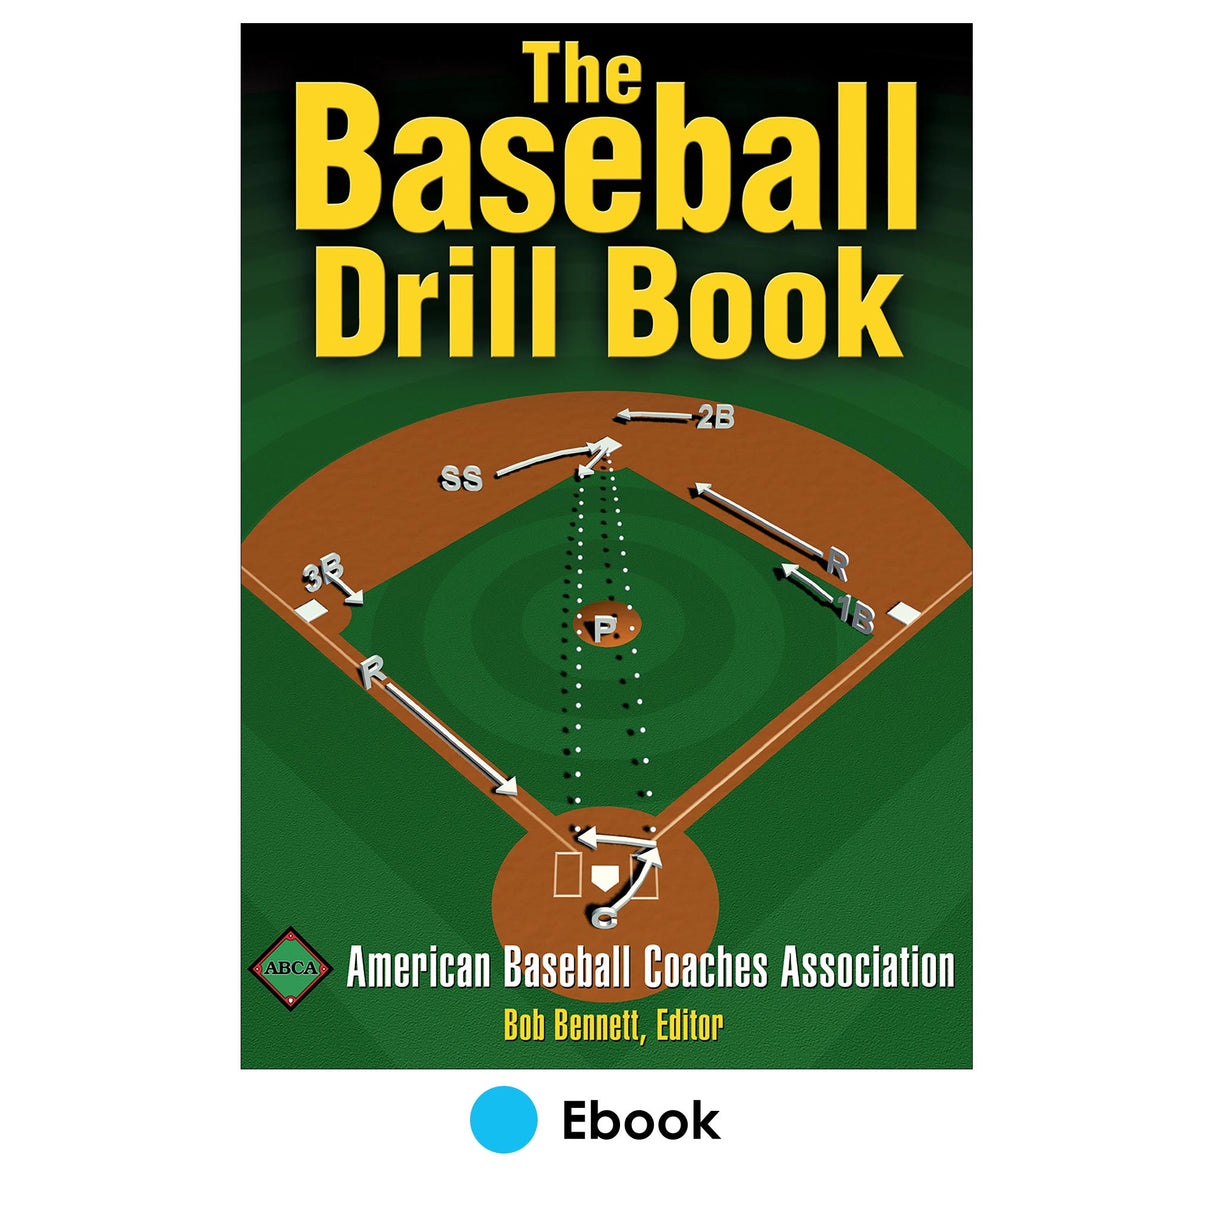 Baseball Drill Book PDF, The